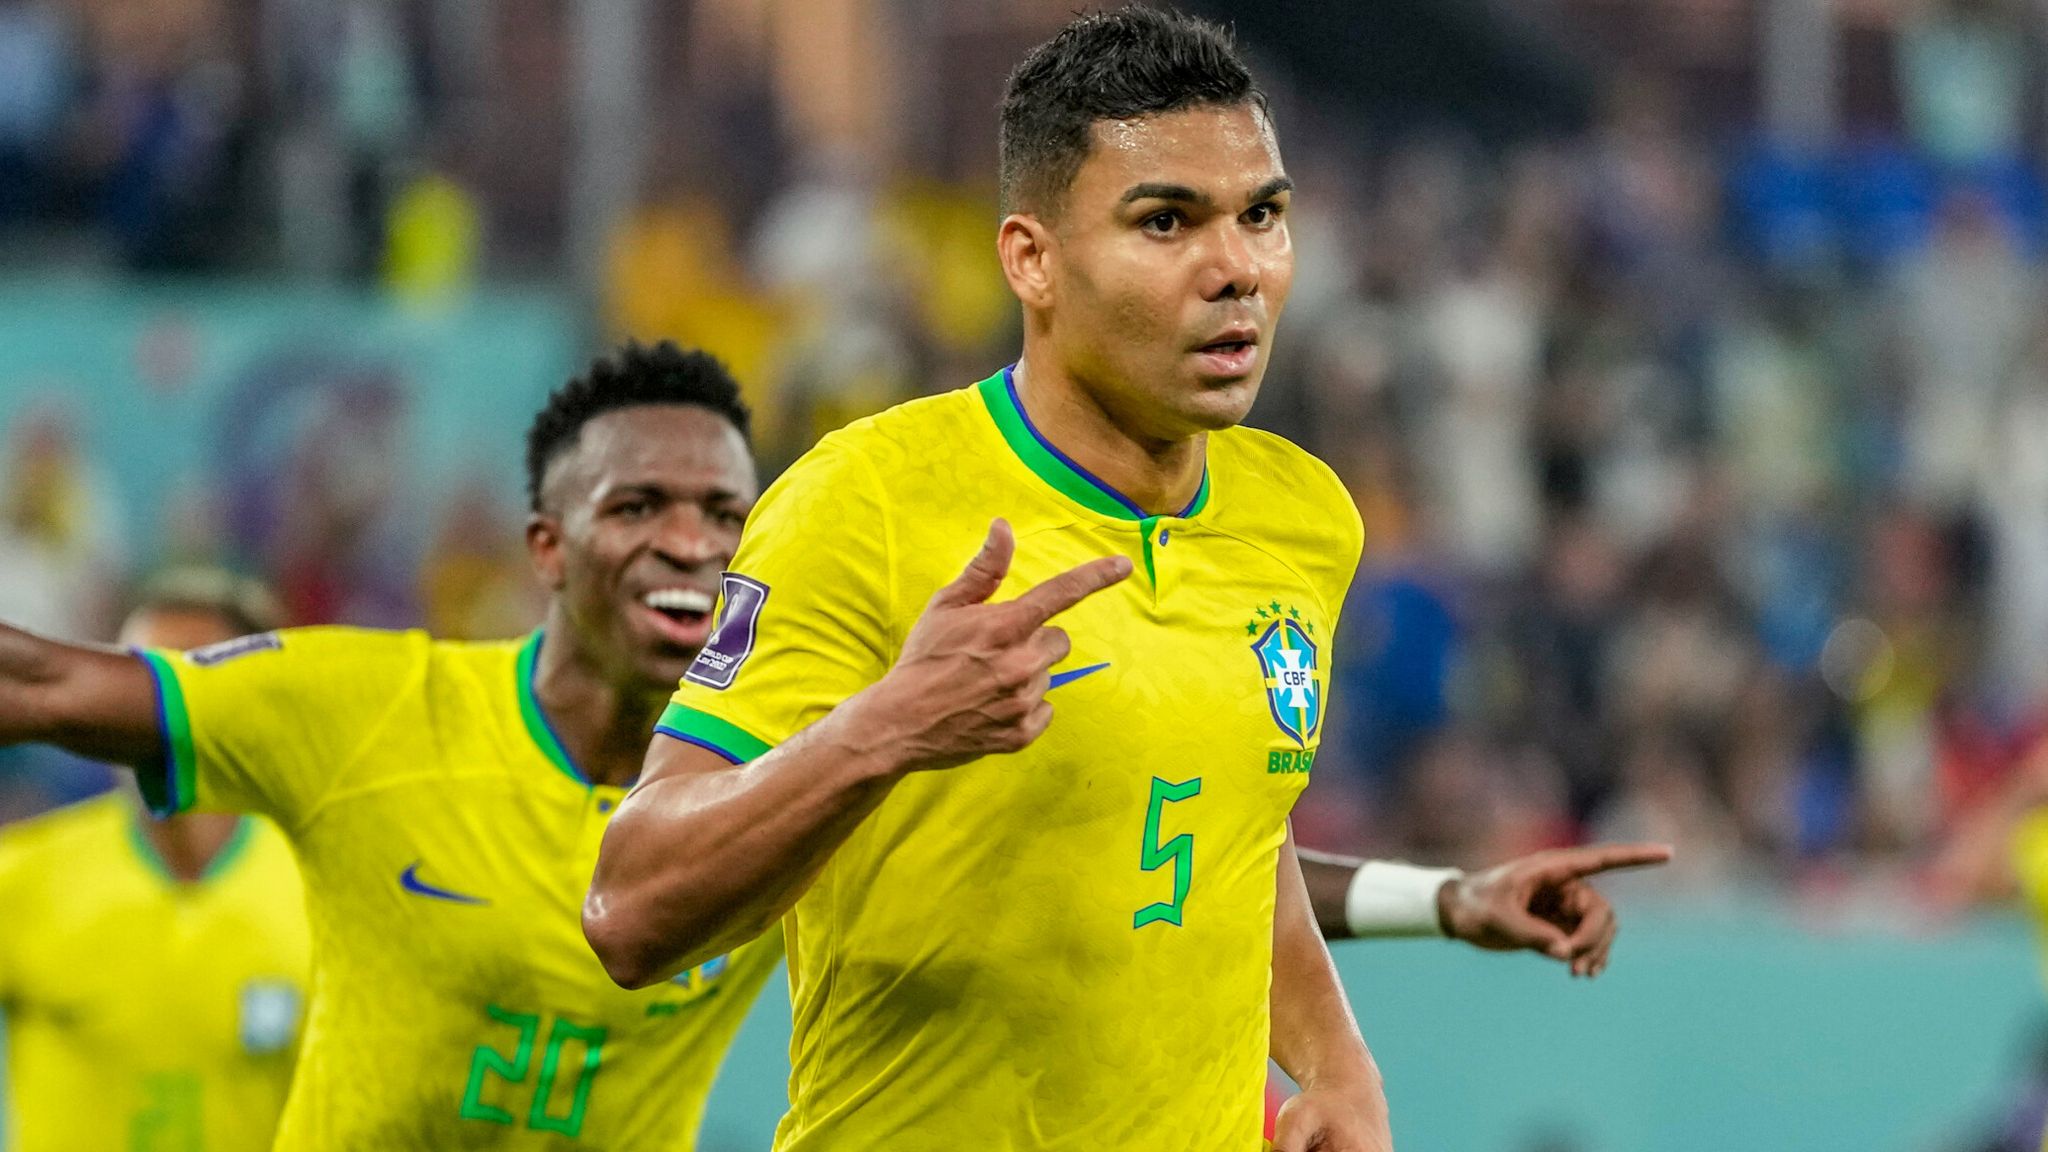 Brazil 1-0 Colombia (Nov 11, 2021) Game Analysis - ESPN